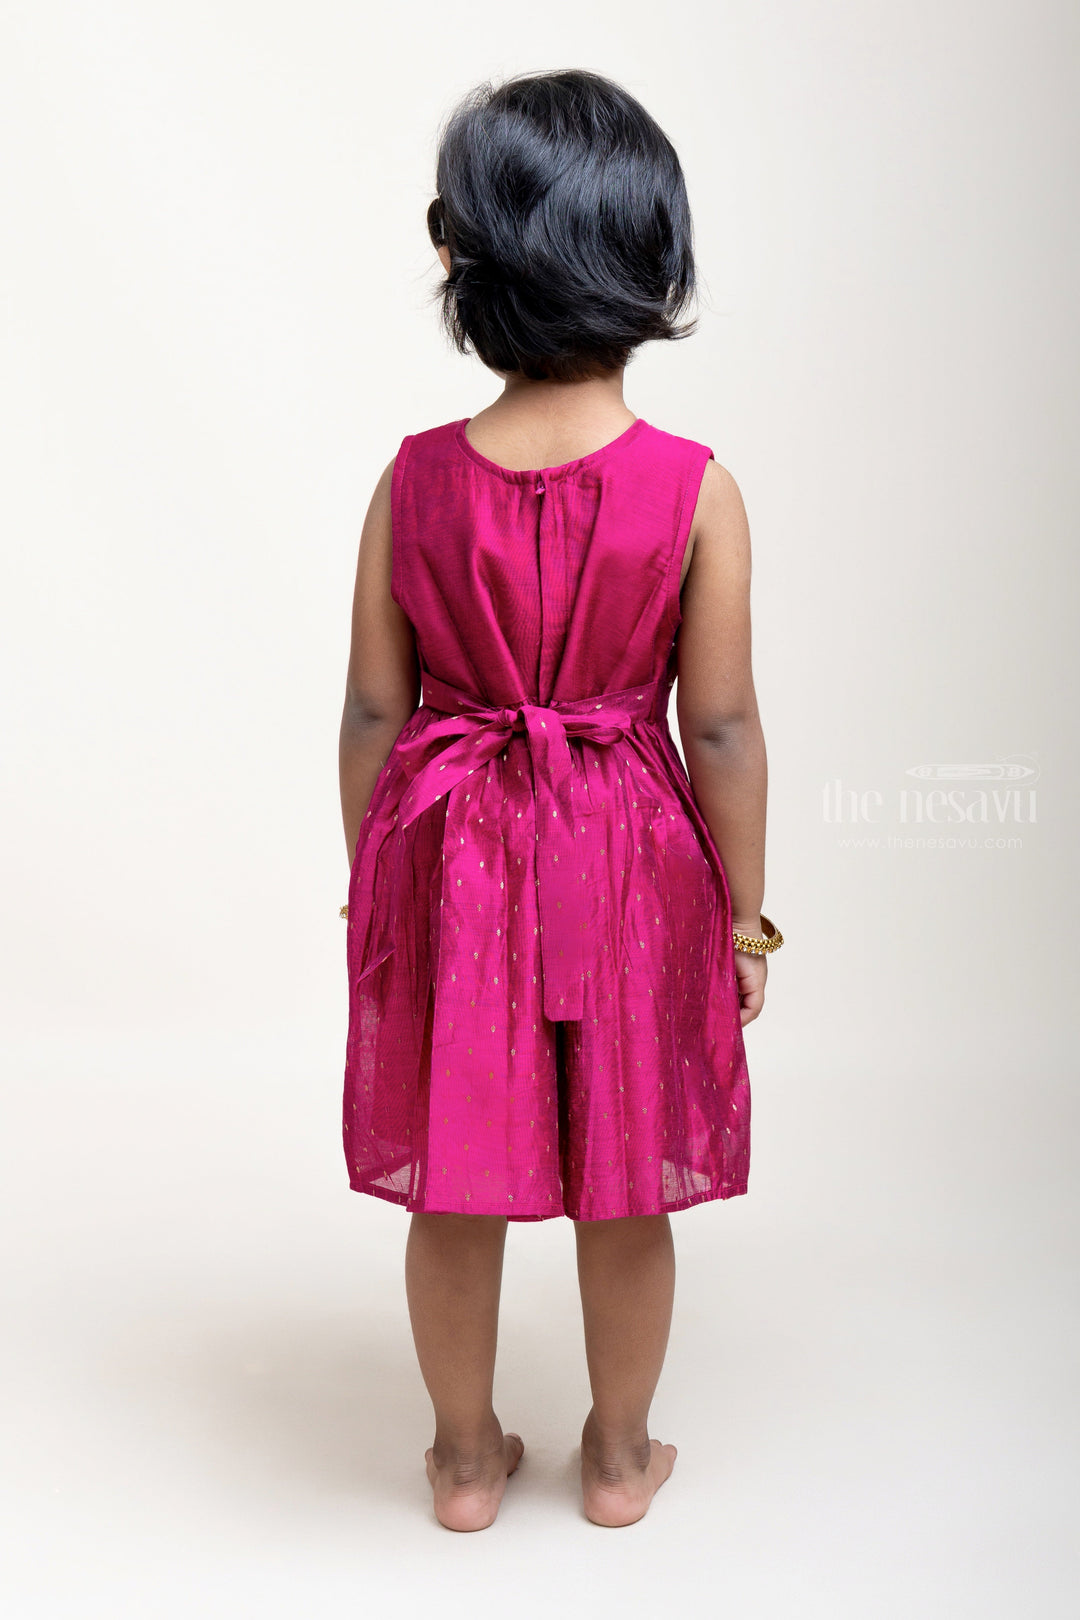 The Nesavu Girls Fancy Frock Purple Neck Embroidered Cotton Frock For Little Girls Nesavu Chinna Pillala Frocks | Cotton Frocks Designs | The Nesavu